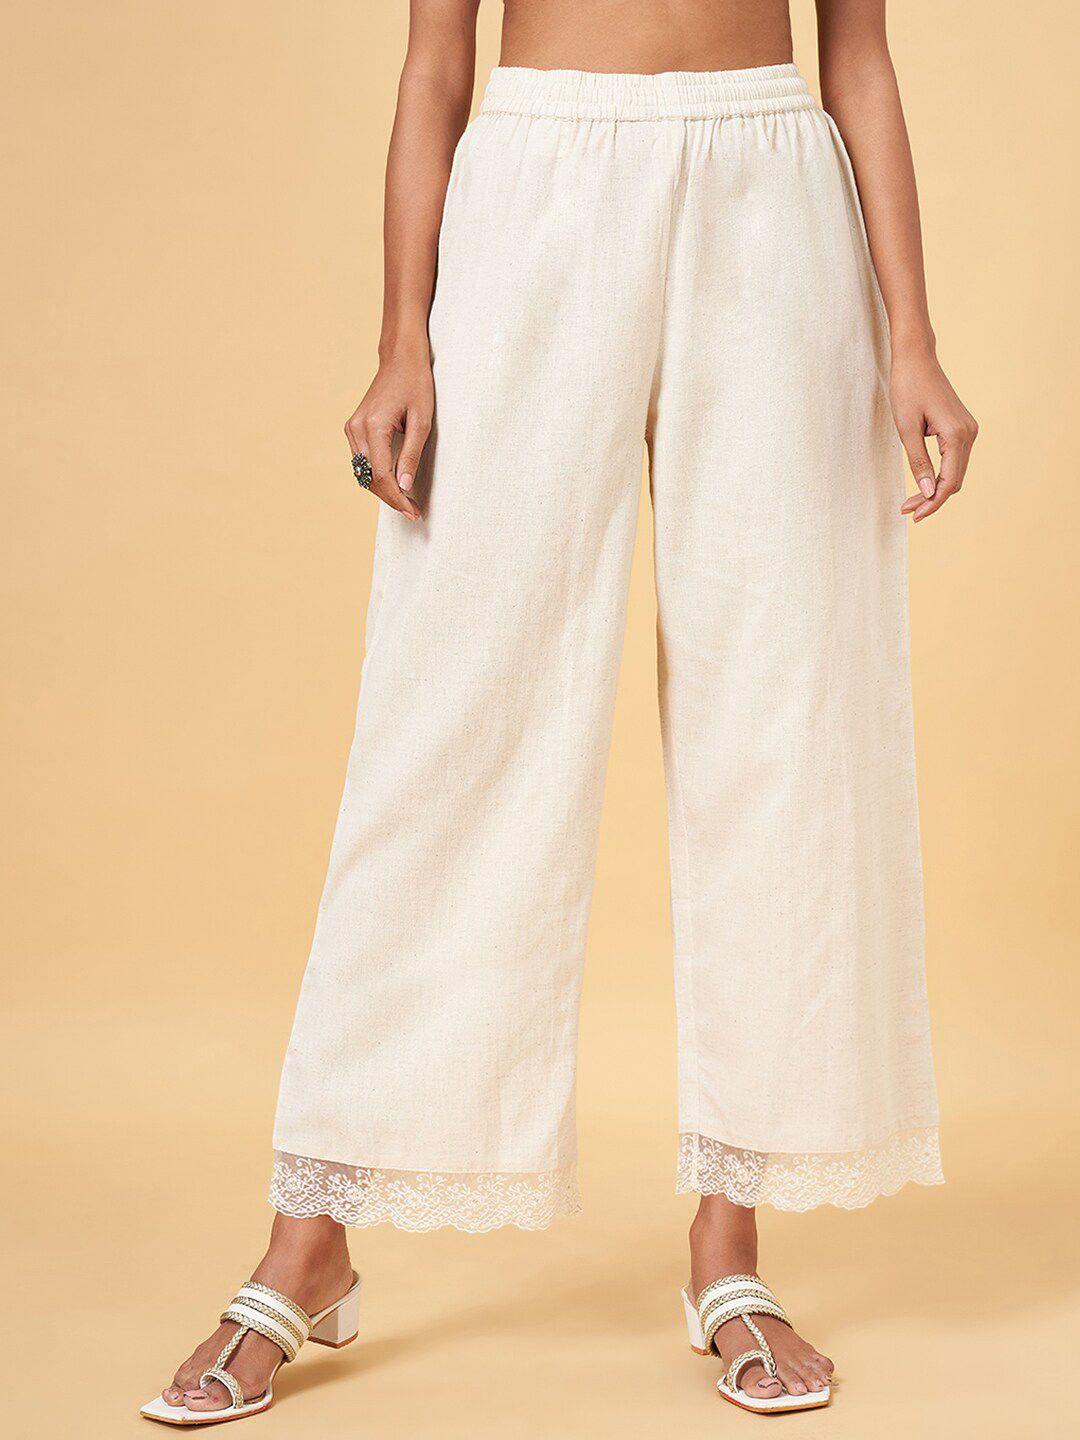 rangmanch by pantaloons women cotton flared trouser